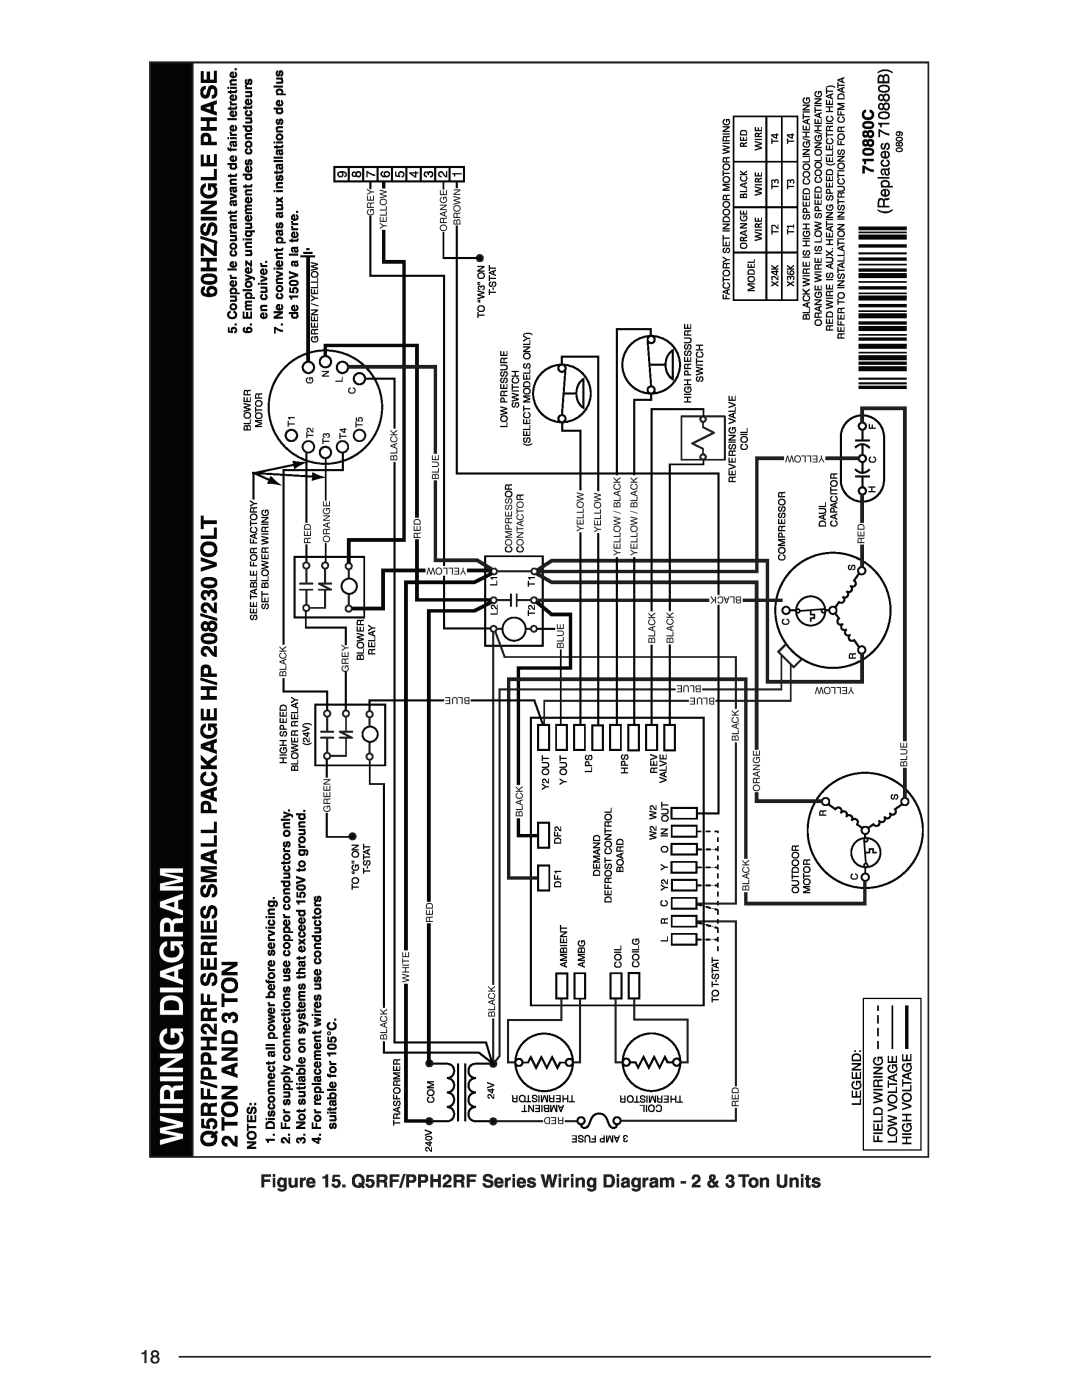 Nordyne R-410A Wiring Diagram, Q5RF/PPH2RF SERIES SMALL PACKAGE H/P 208/230 VOLT, 60HZ/SINGLE PHASE, TON AND 3 TON, Orange 